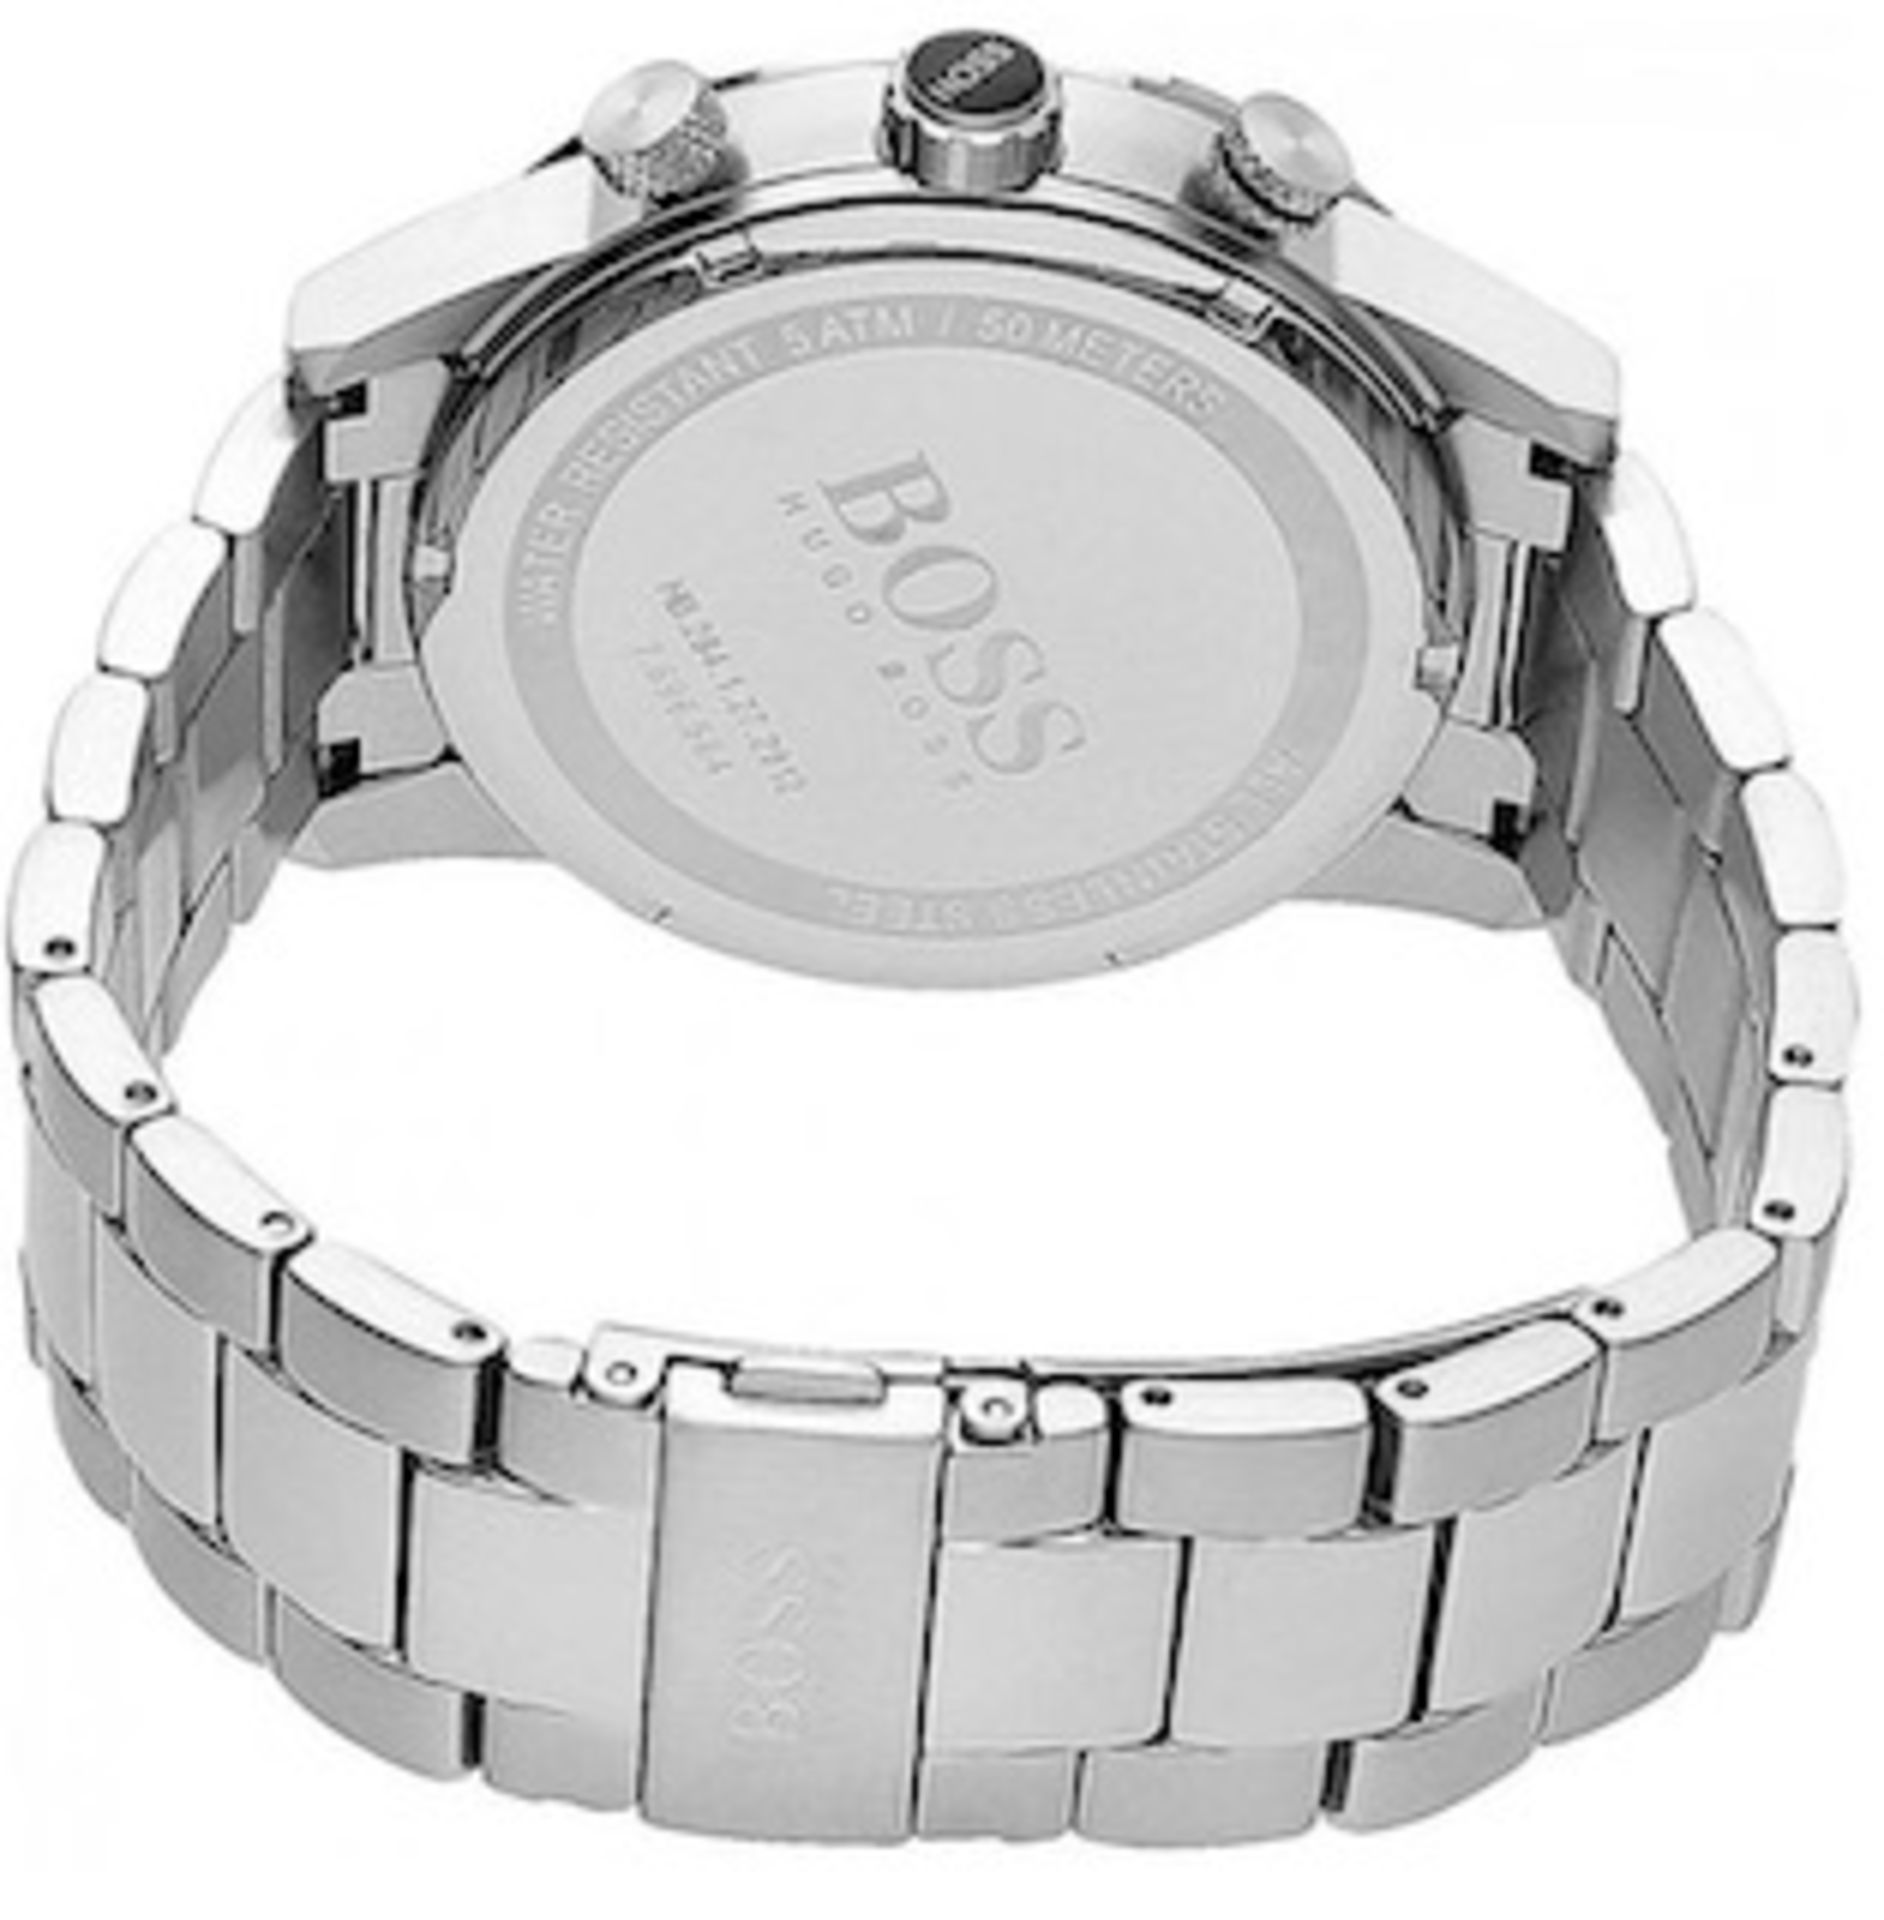 Hugo Boss 1513510 Men's Rafale Blue Dial Silver Bracelet Chronograph Watch - Image 4 of 4